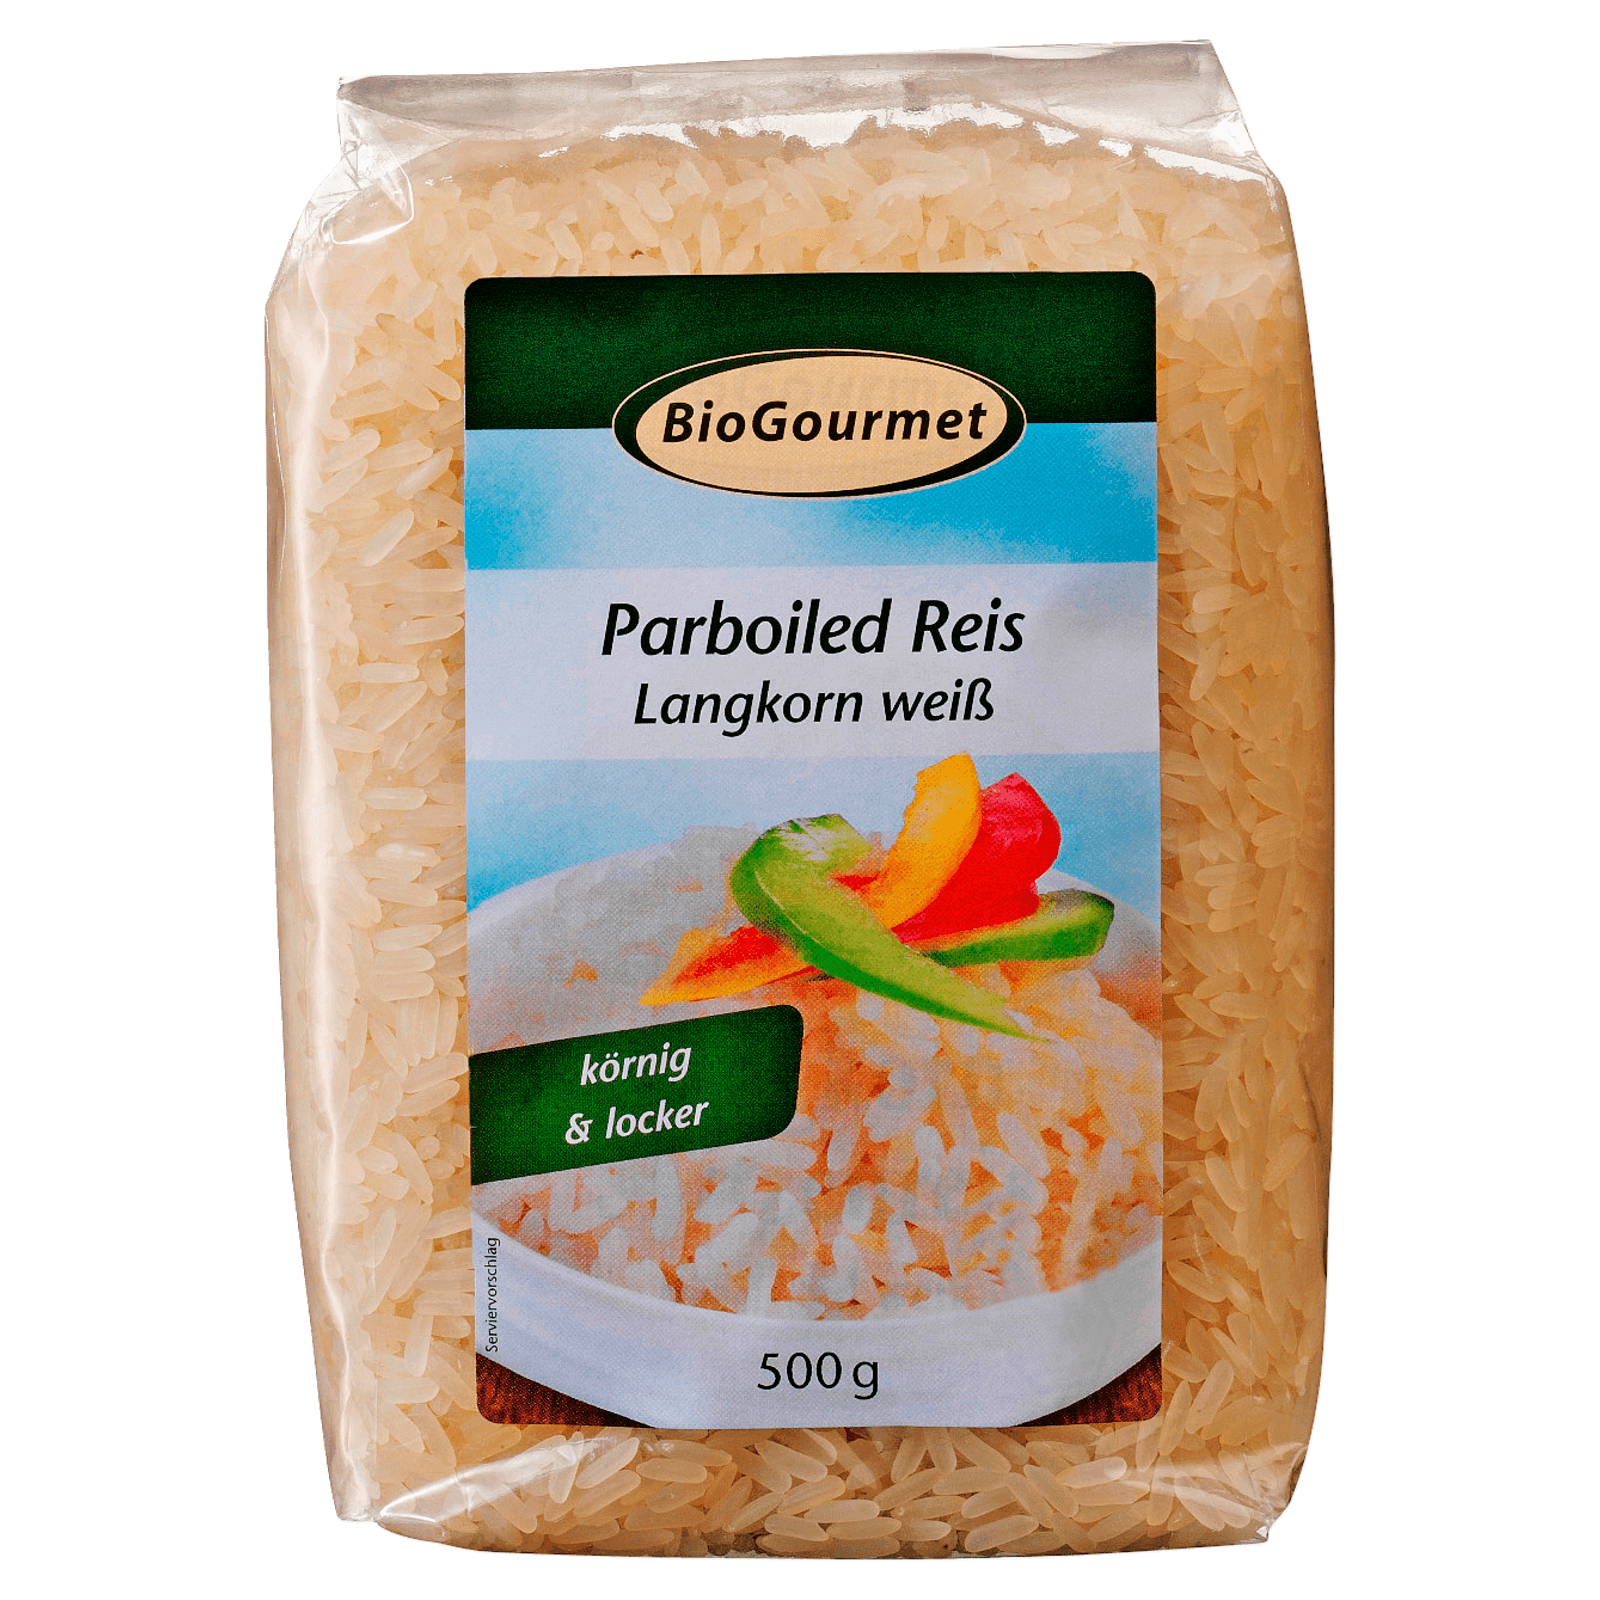 BioGourmet Bio Parboiled Reis 500g  für 3.09 EUR